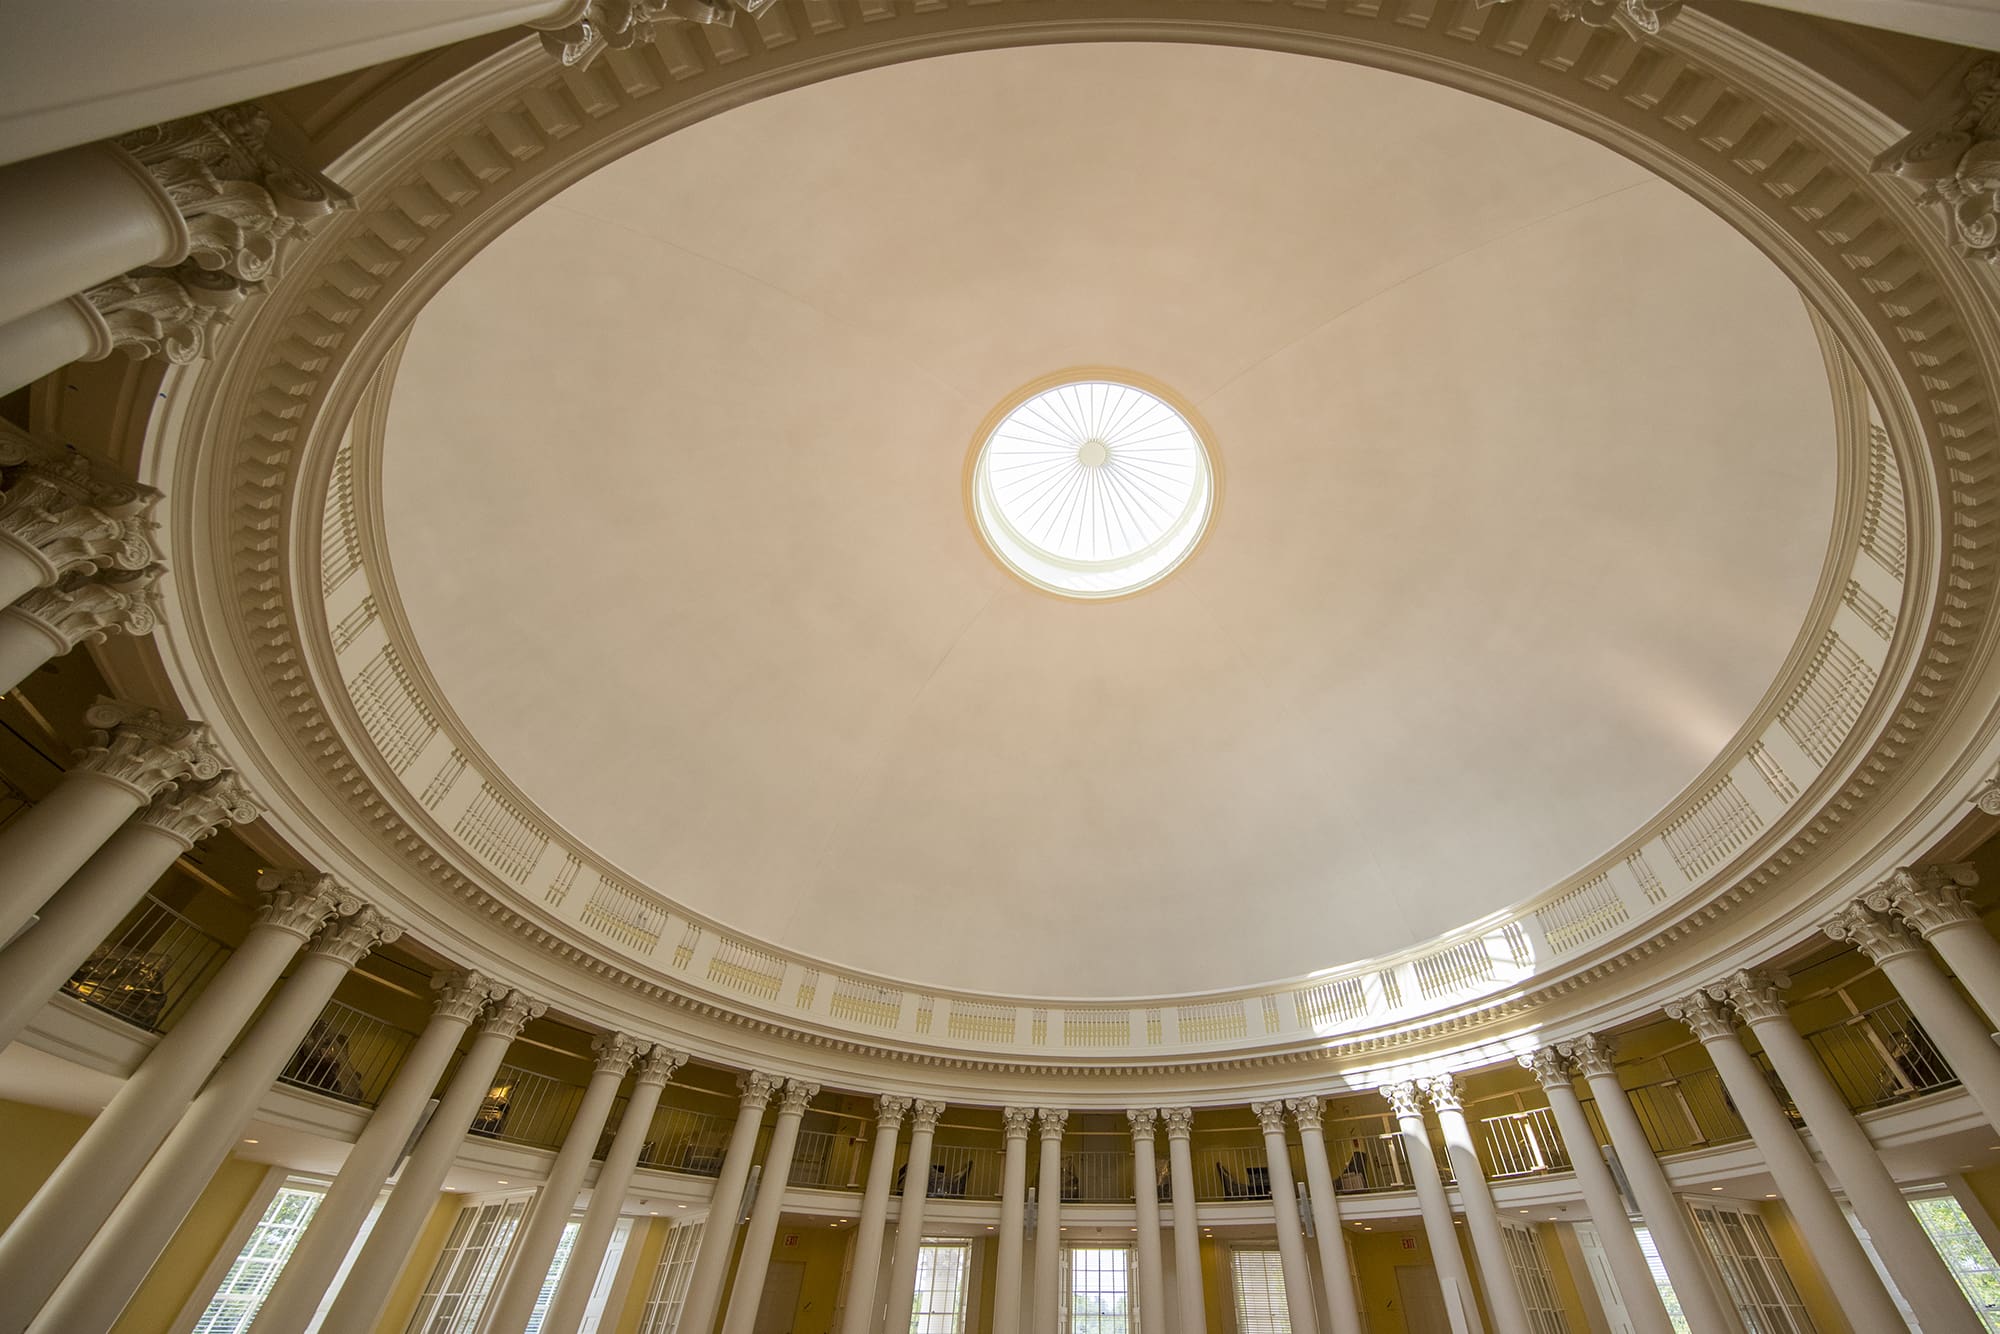 Ceiling of the Rotunda